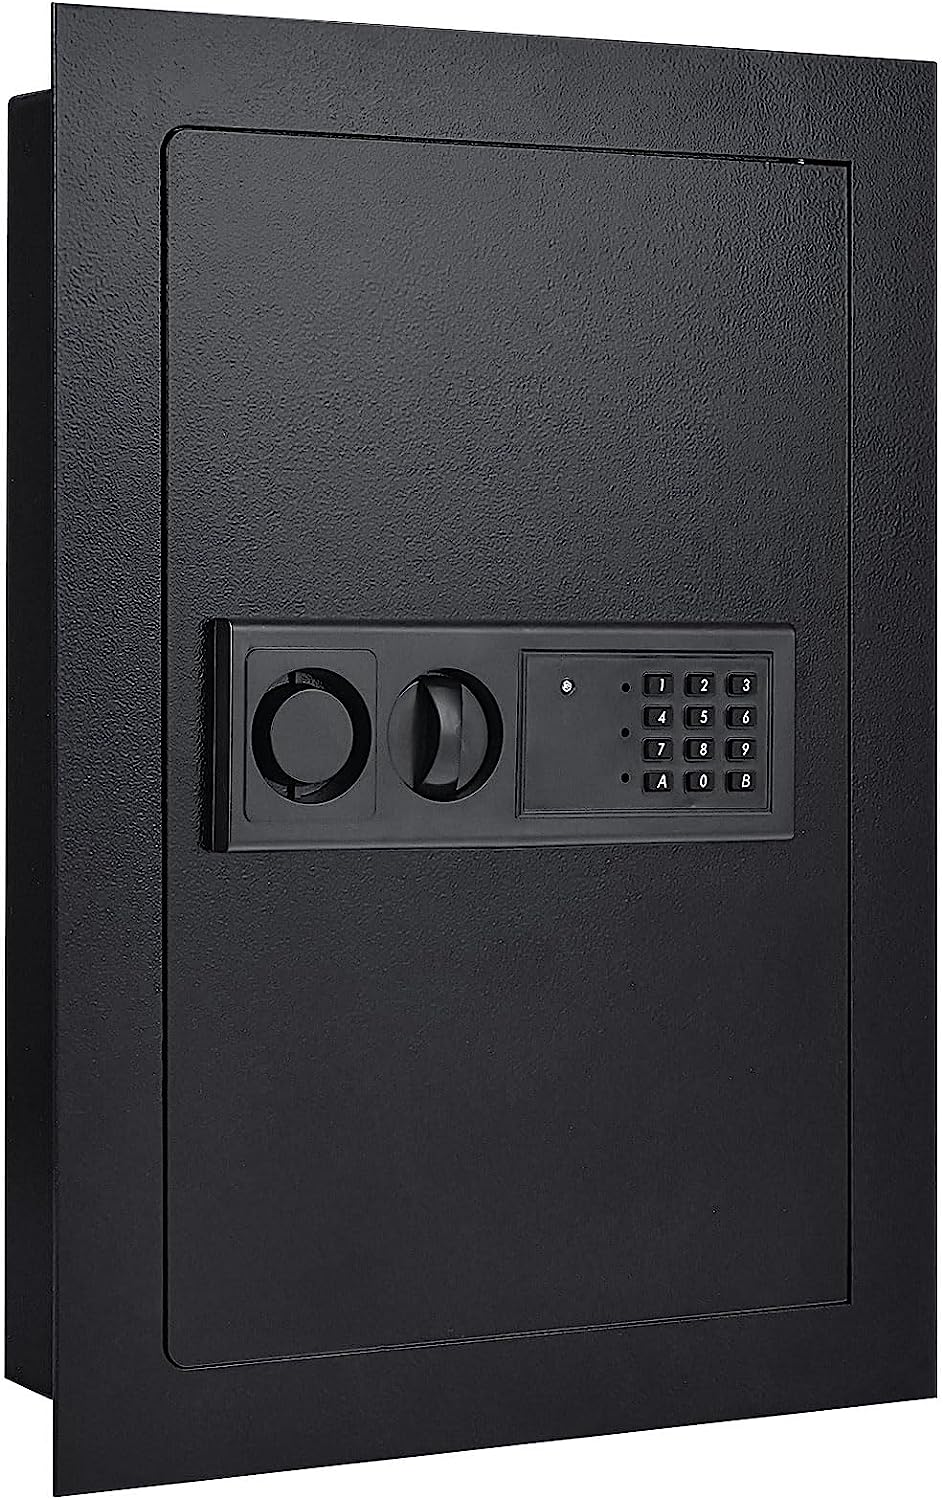 Giantex Electronic Wall Hidden Safe Security Box,.83 CF Built-In Wall Electronic Flat Security Safety Cabinet